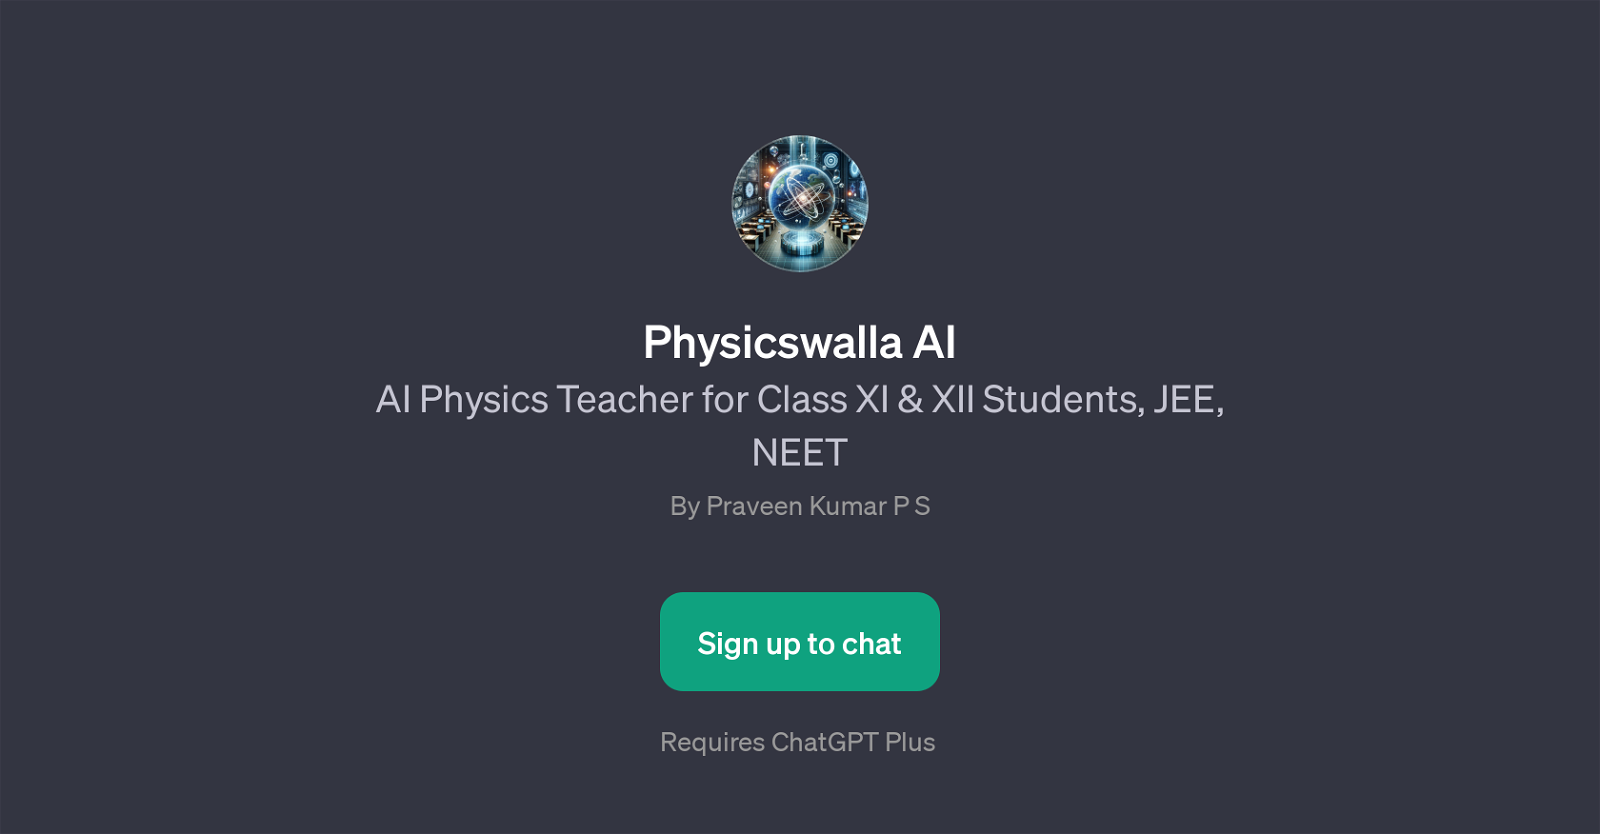 Physicswalla AI website